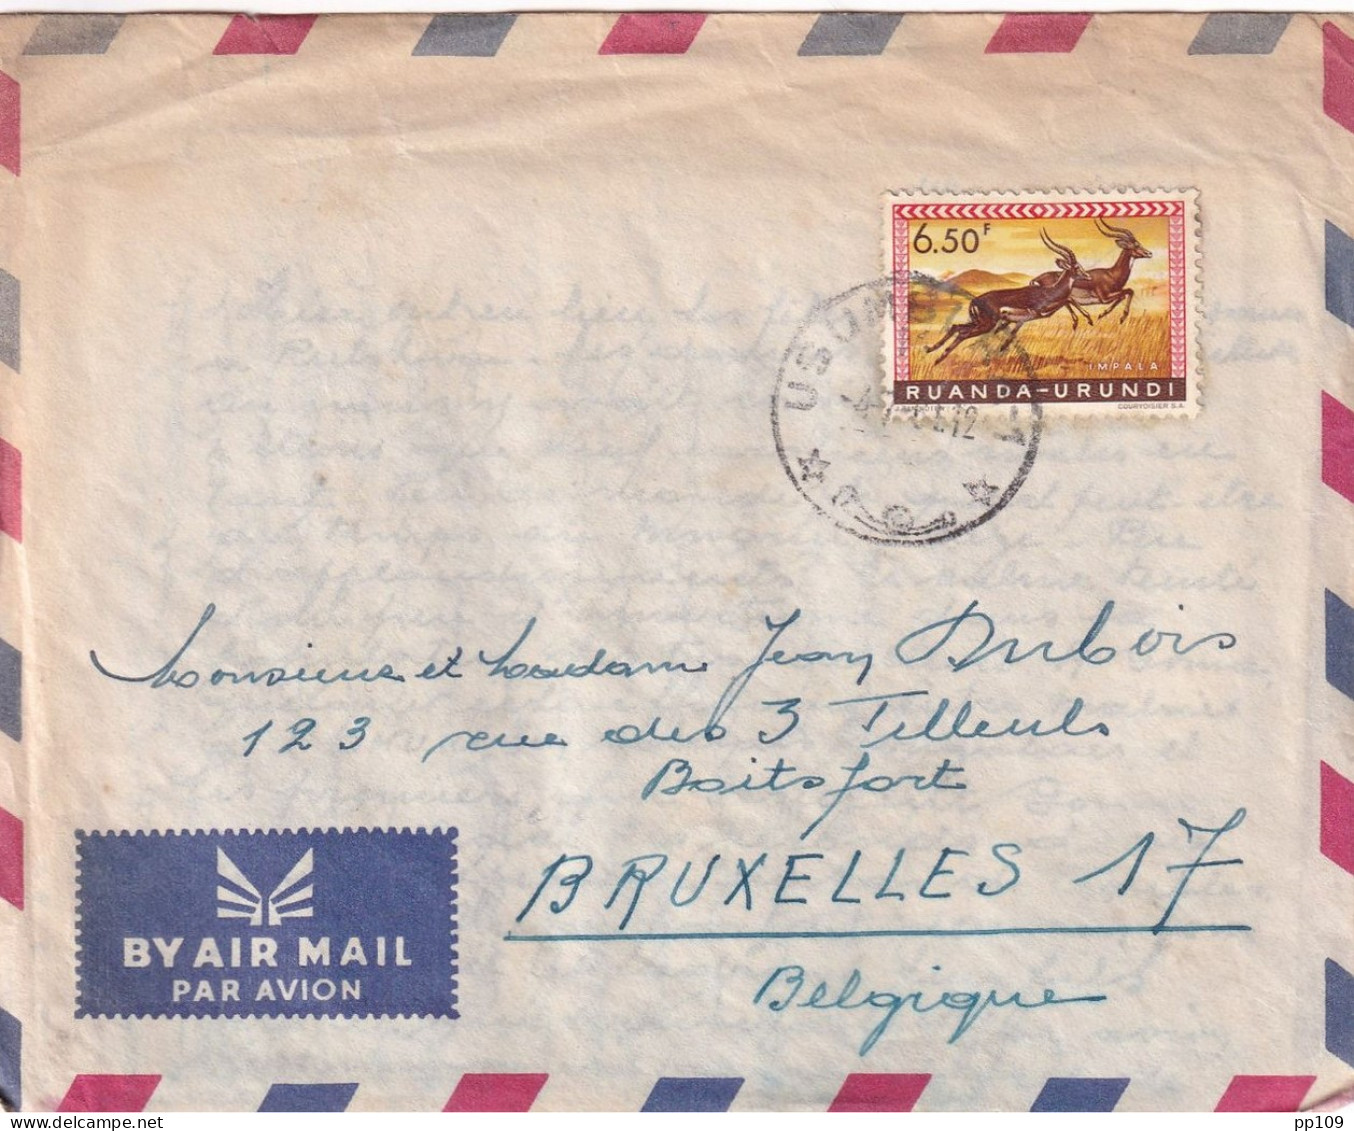 RUANDA URUNDI   TP Impala  Obl USUMBURA 4 VII 56  /L Par Avion By Air Mail Vers Boitsfort  Dubois  + Contenu - Covers & Documents